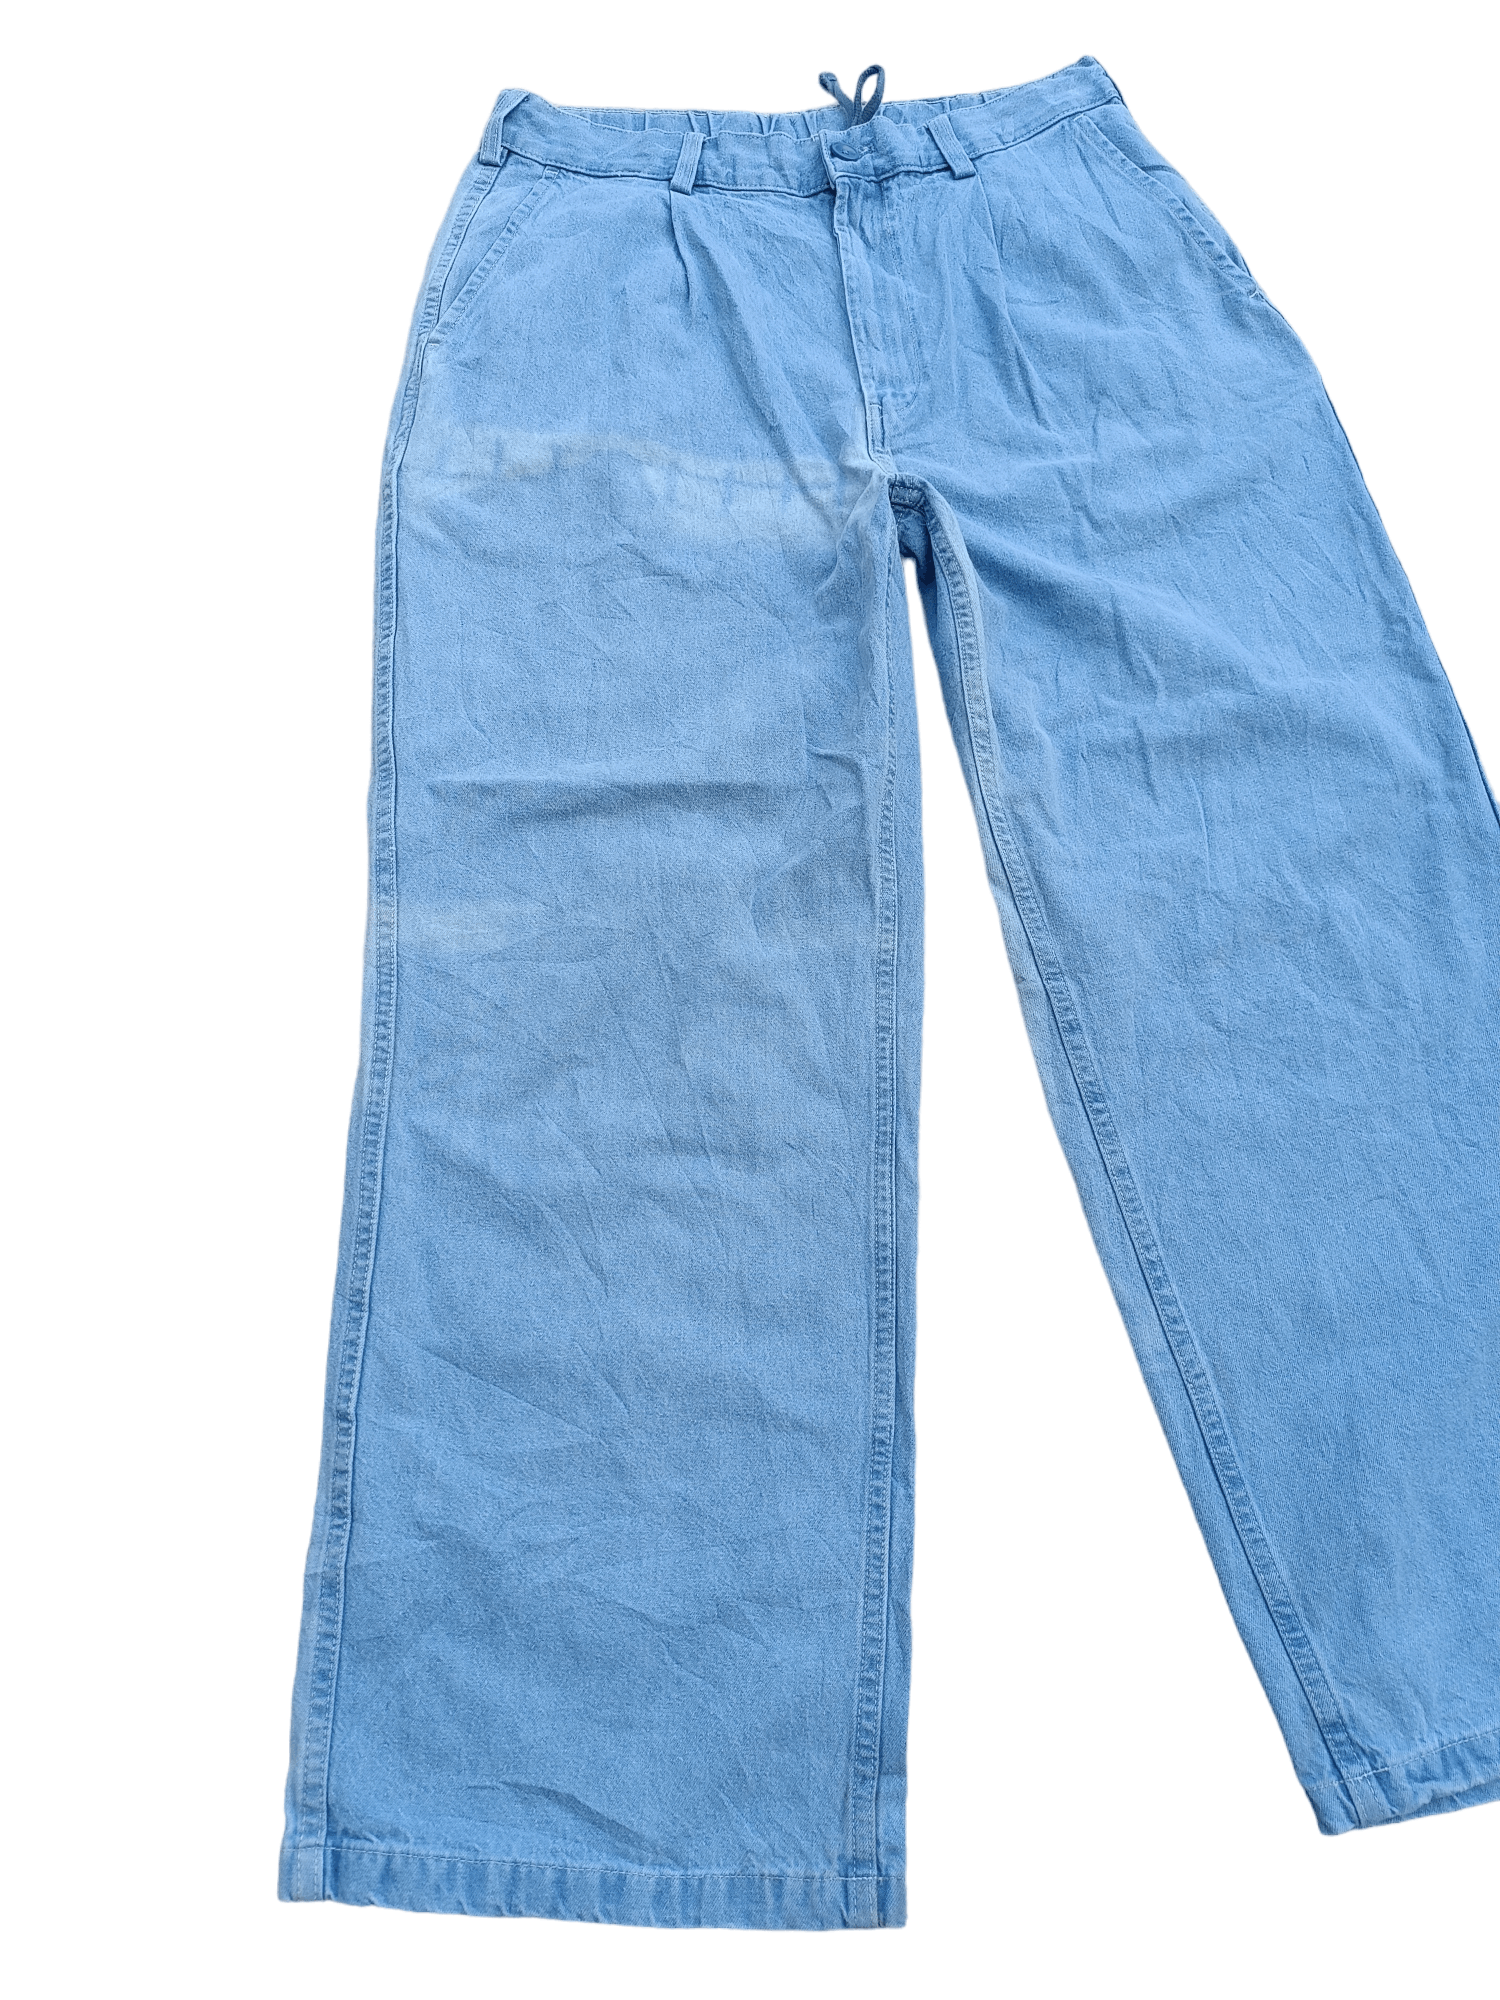 Japanese Brand Vintage Japanese Gu Baggy Style Flare Jeans 30x30 Size US 32 / EU 48 - 6 Thumbnail